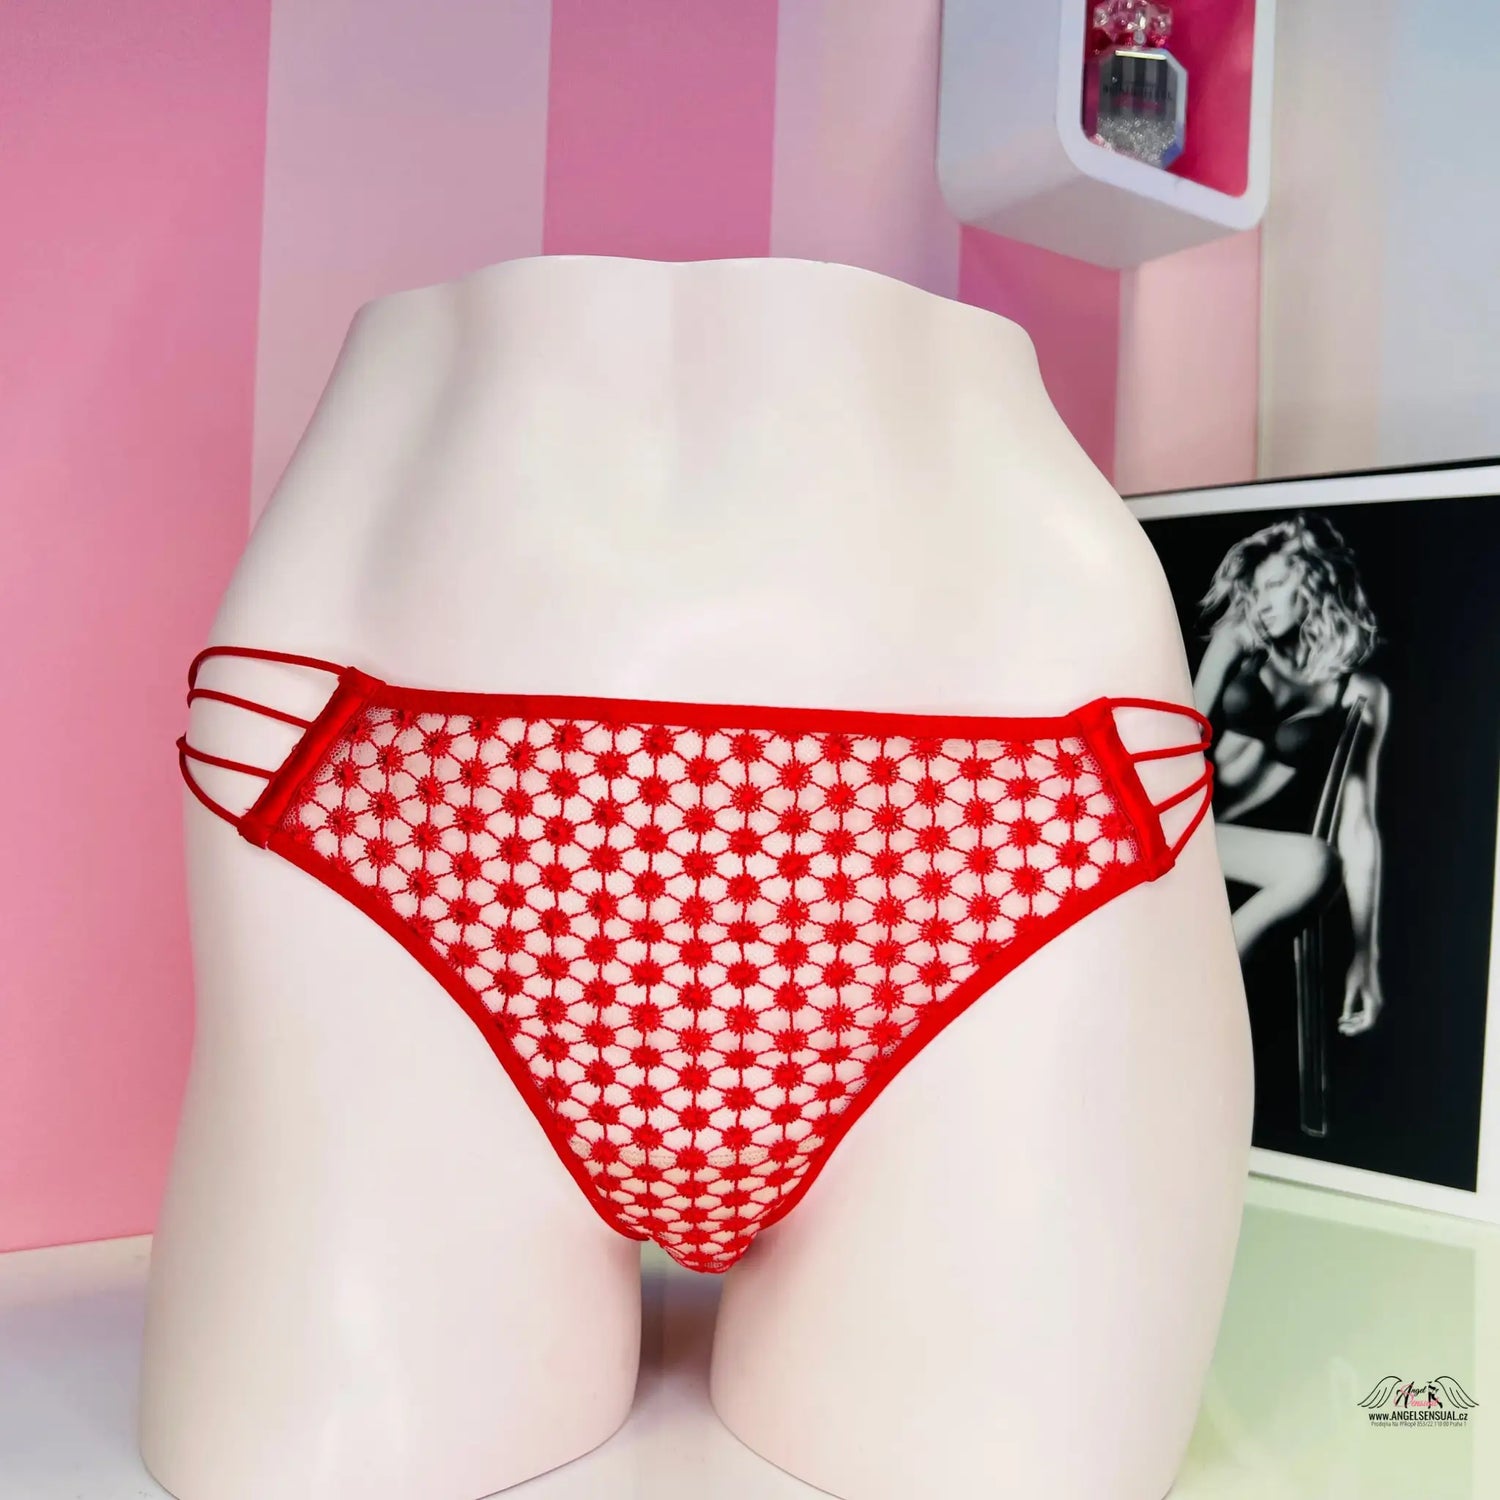 Síťované tanga s úzkými gumičkami - M / Červená / Nové se štítky - Kalhotky Victoria’s Secret